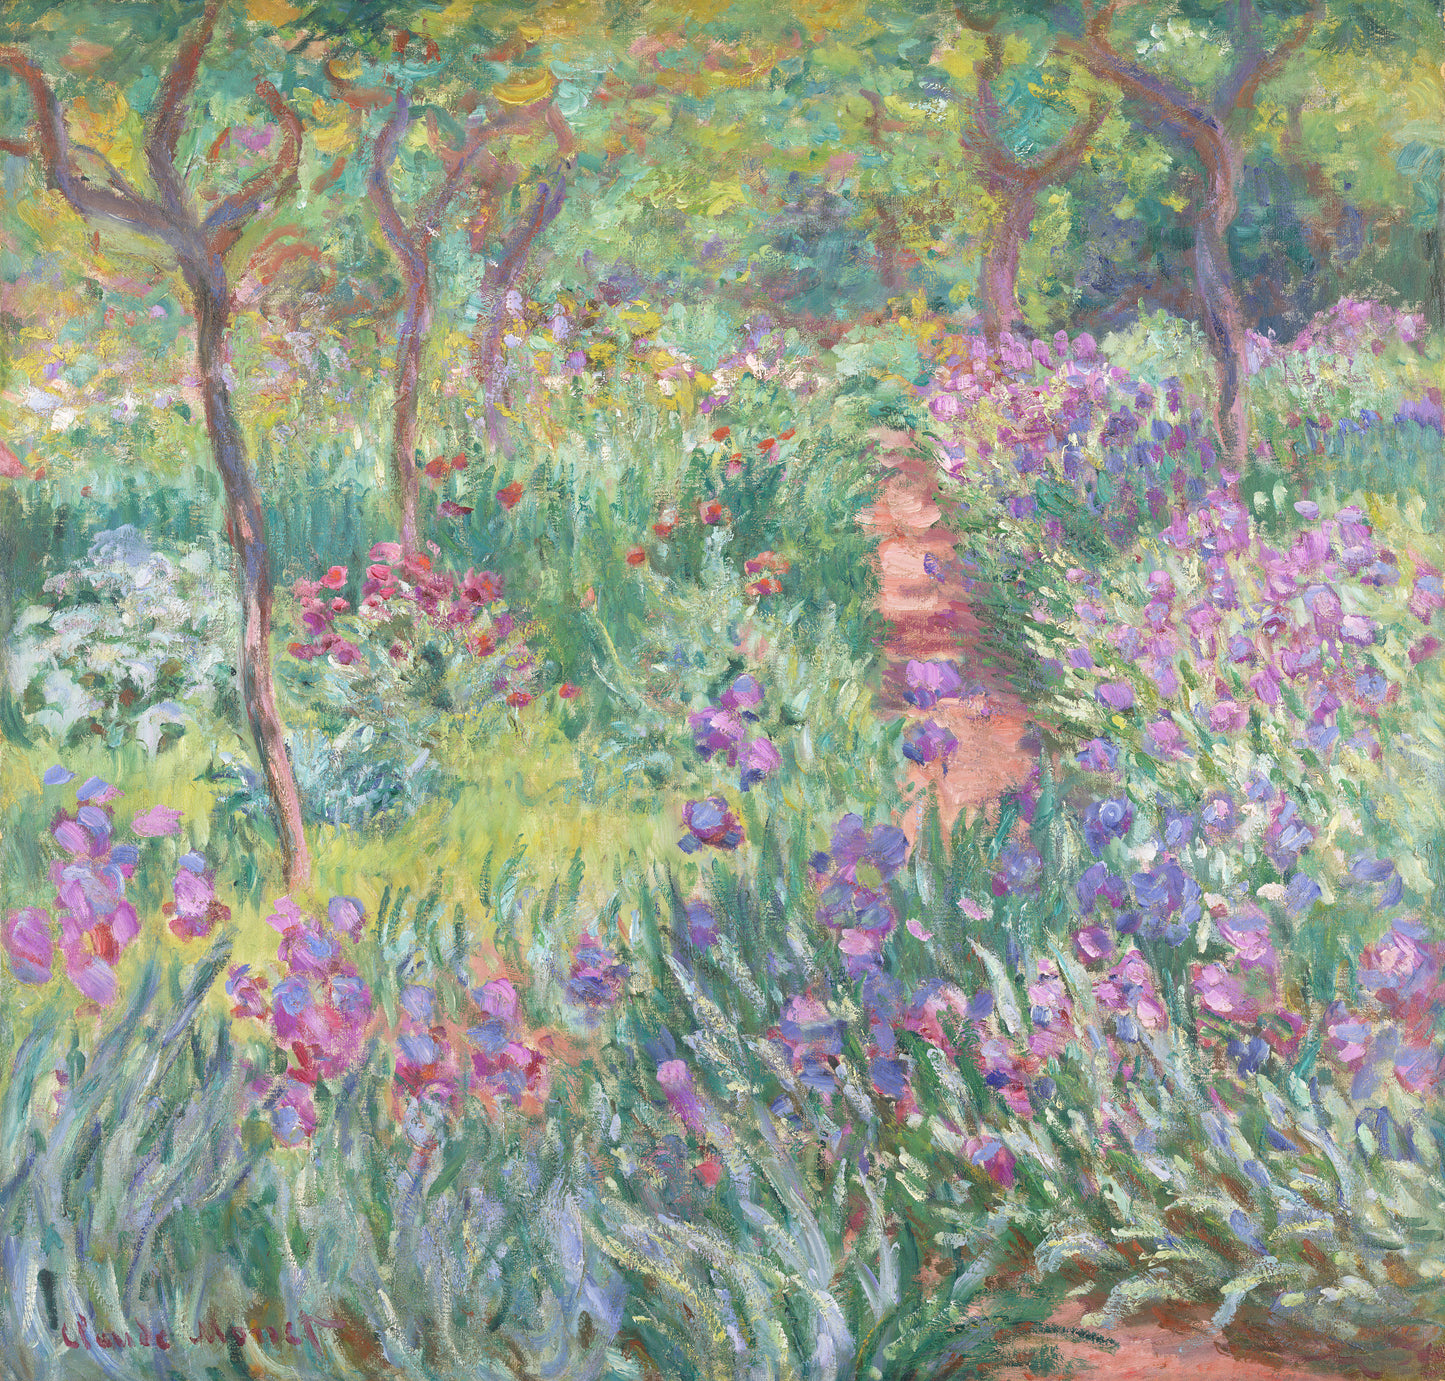 Claude Monet - The Artist’s Garden in Giverny 1900 - Digital Art - JPG File Download